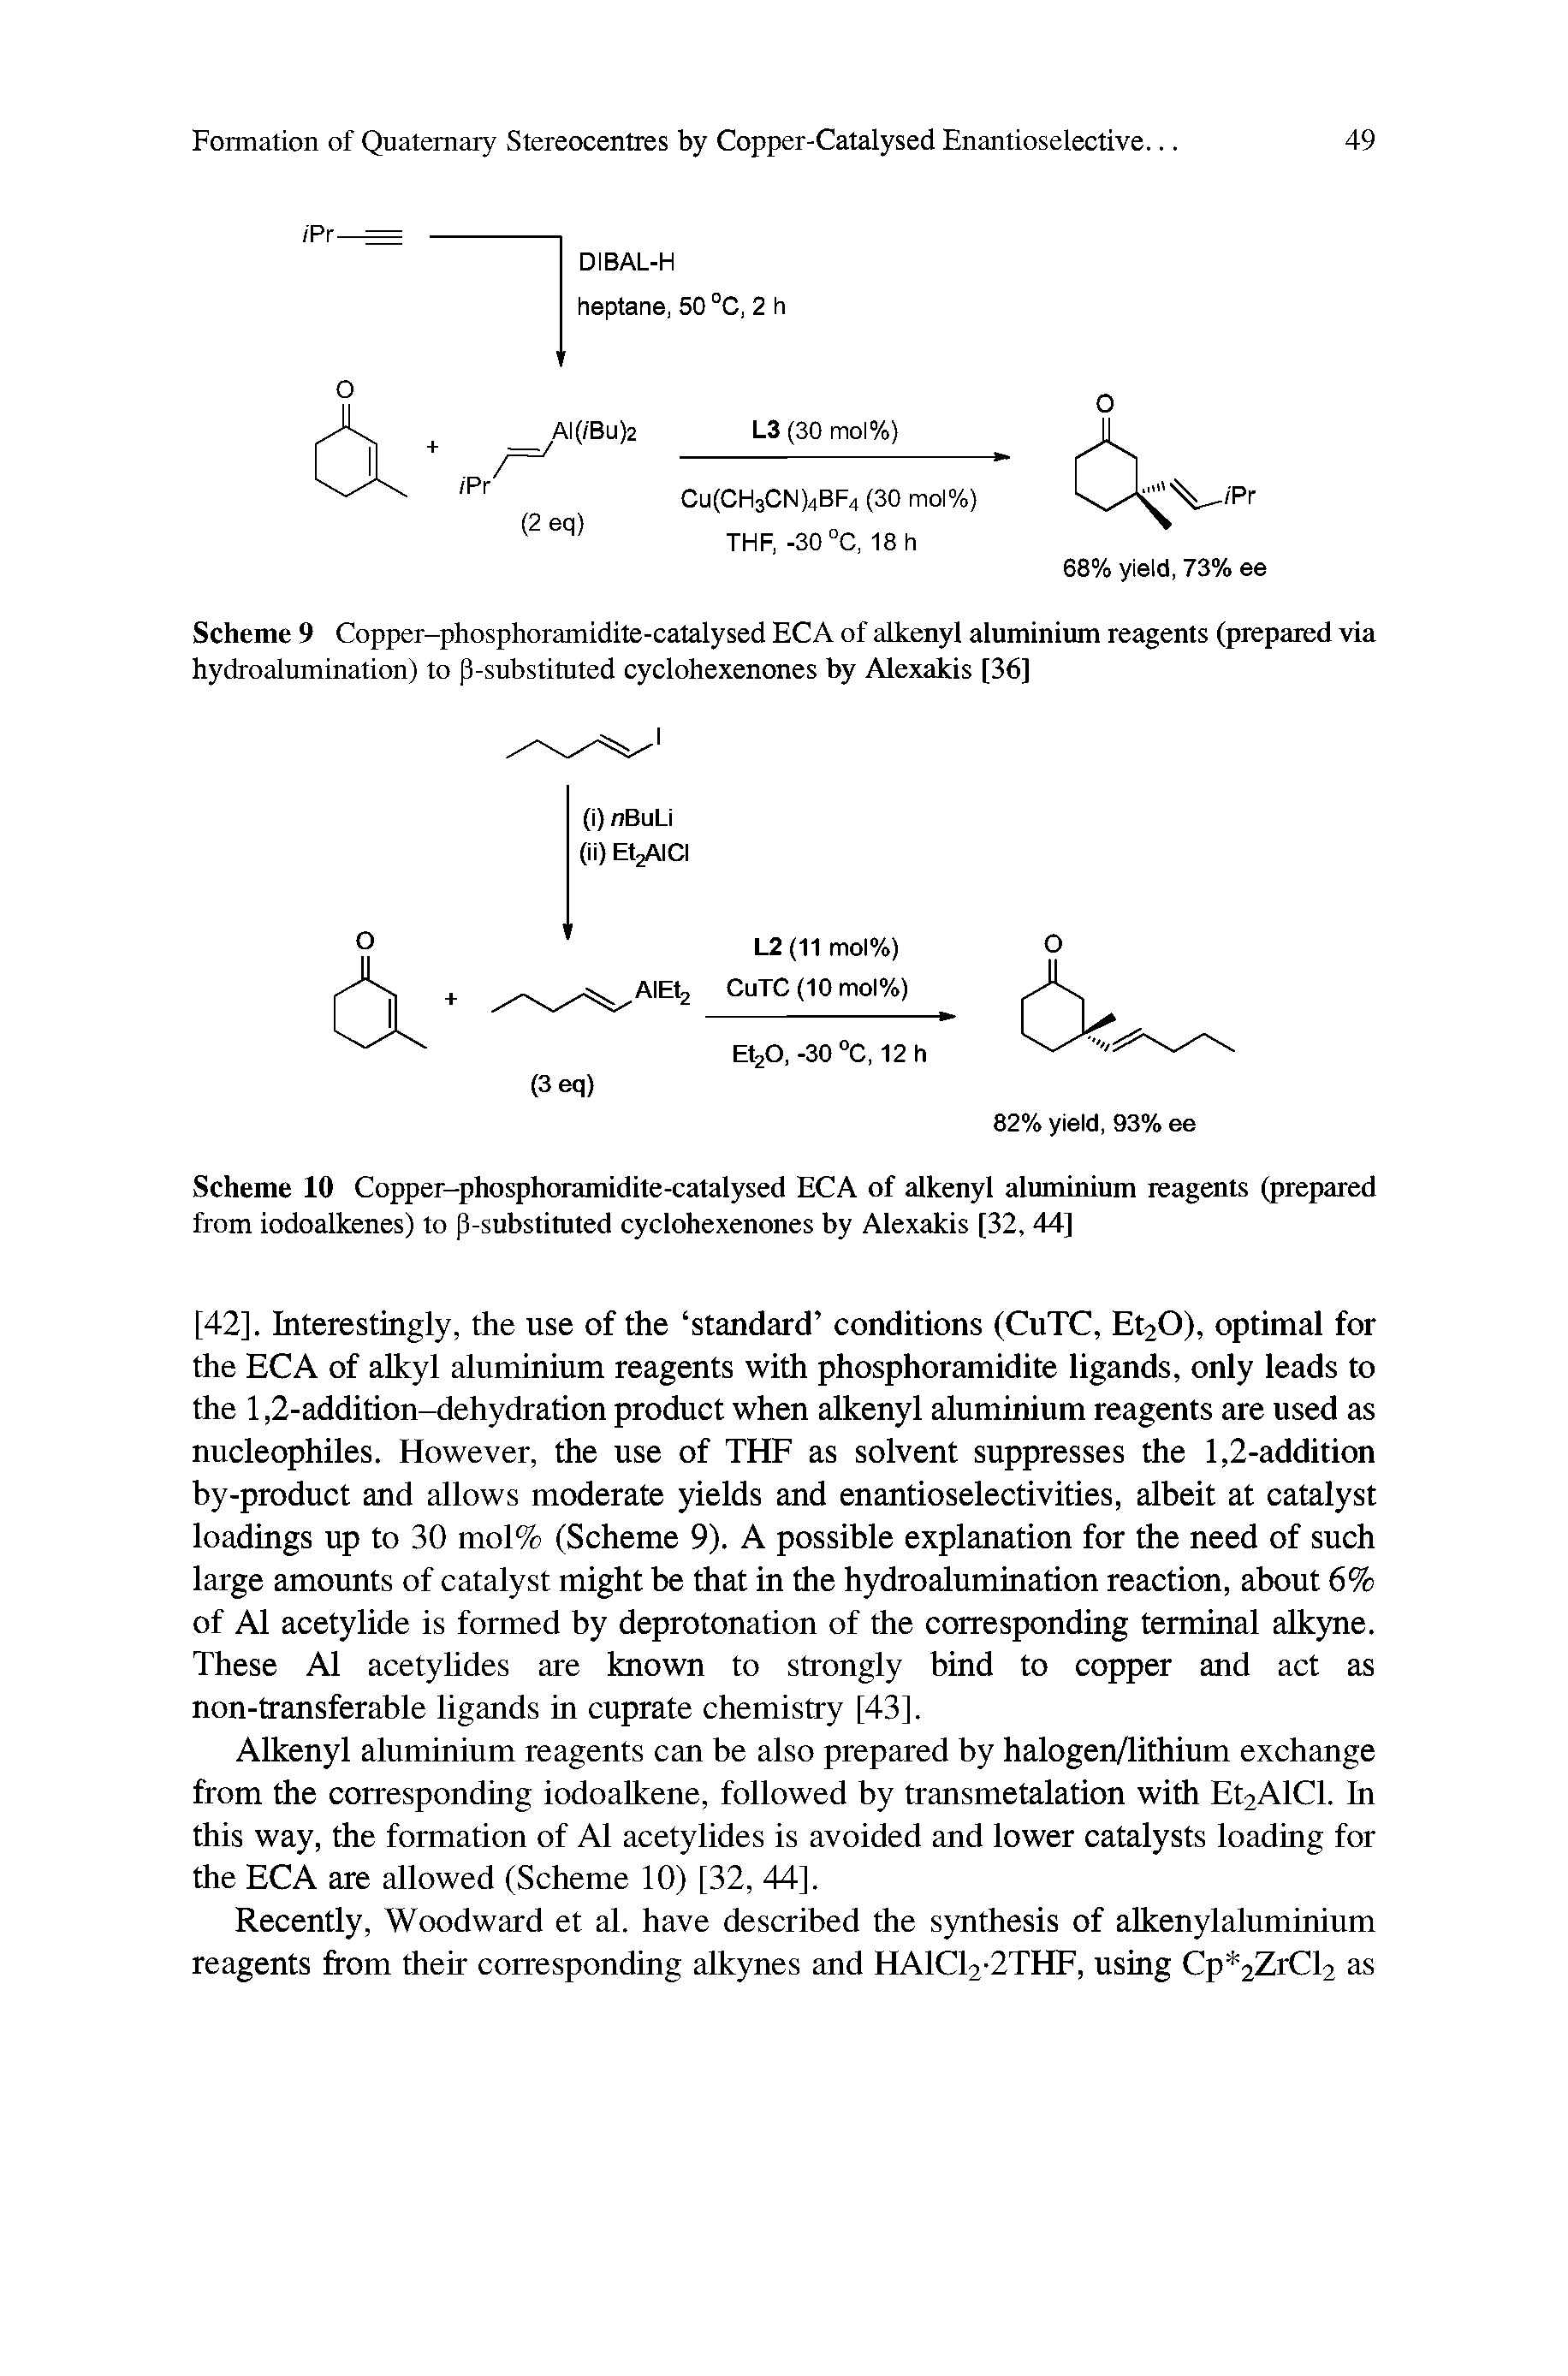 Scheme 9 Copper-phosphoramidite-catalysed ECA of alkenyl aluminium reagents (prepared via hydroalumination) to p-substituted cyclohexenones by Alexakis [36]...